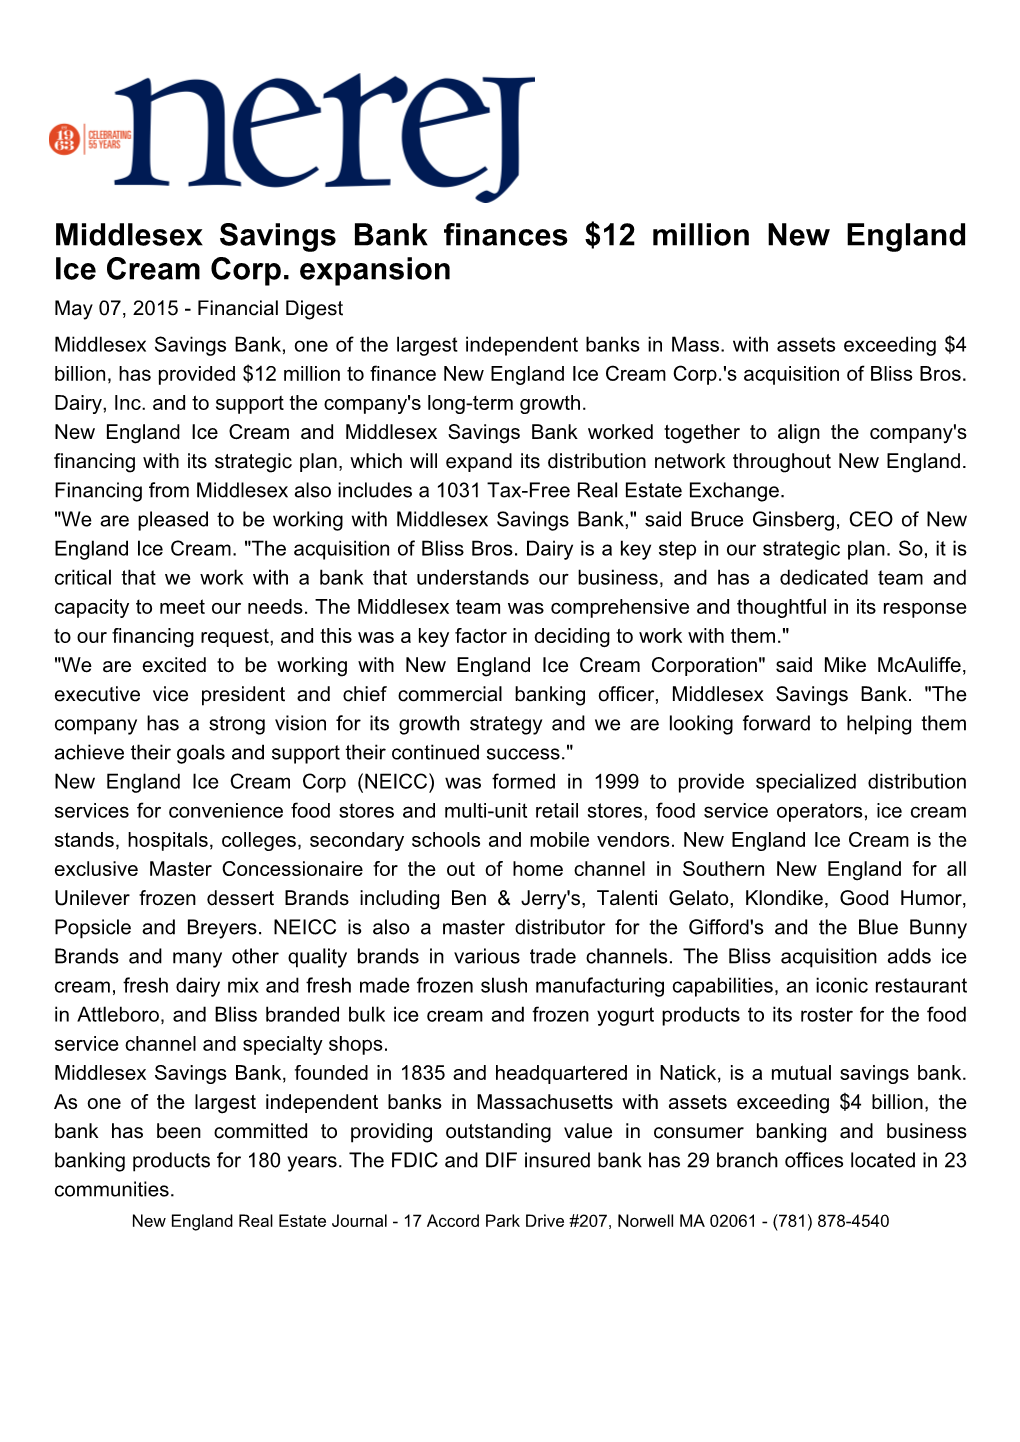 Middlesex Savings Bank Finances $12 Million New England Ice Cream Corp